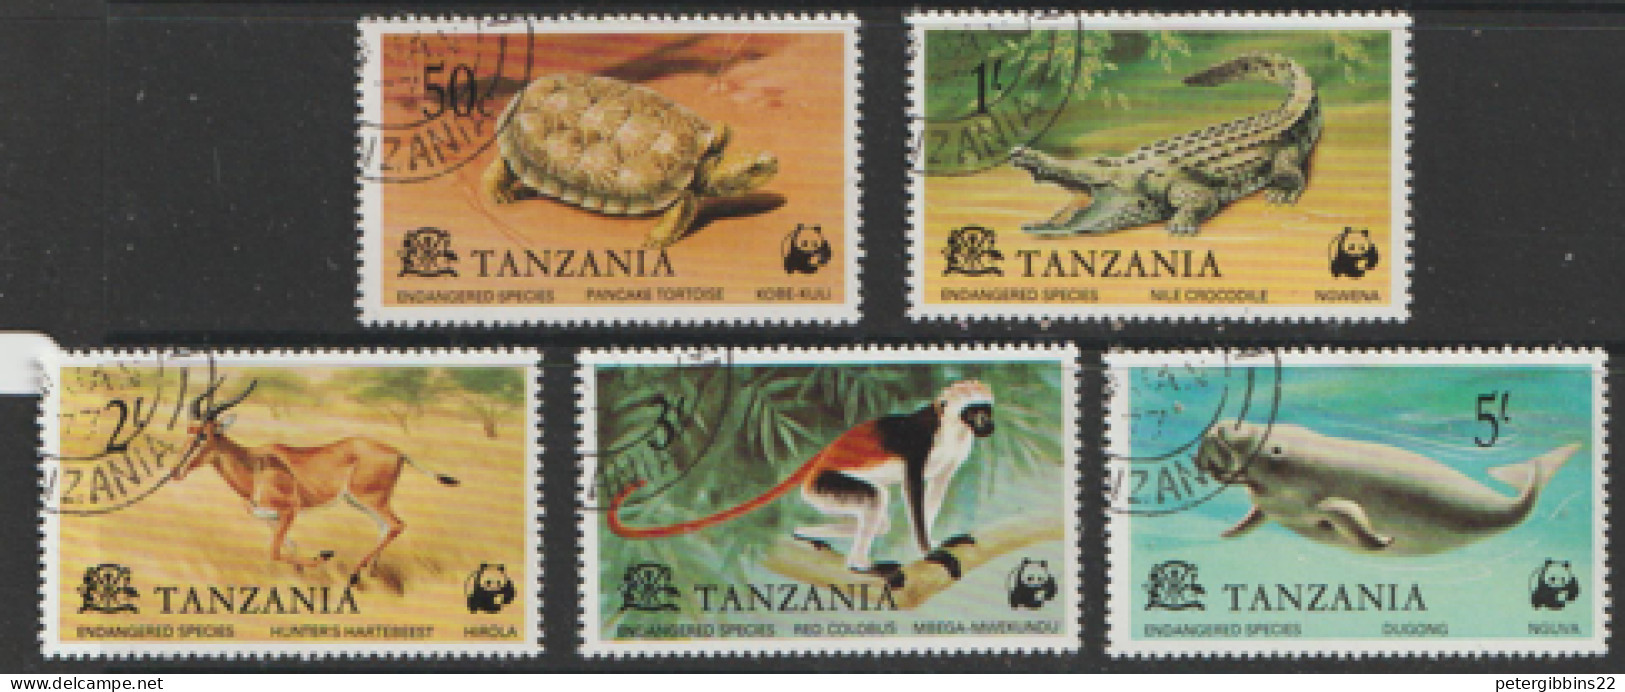 Tanzania   1977   SG 212-6  Wildlife   Fine Used - Tanzanie (1964-...)